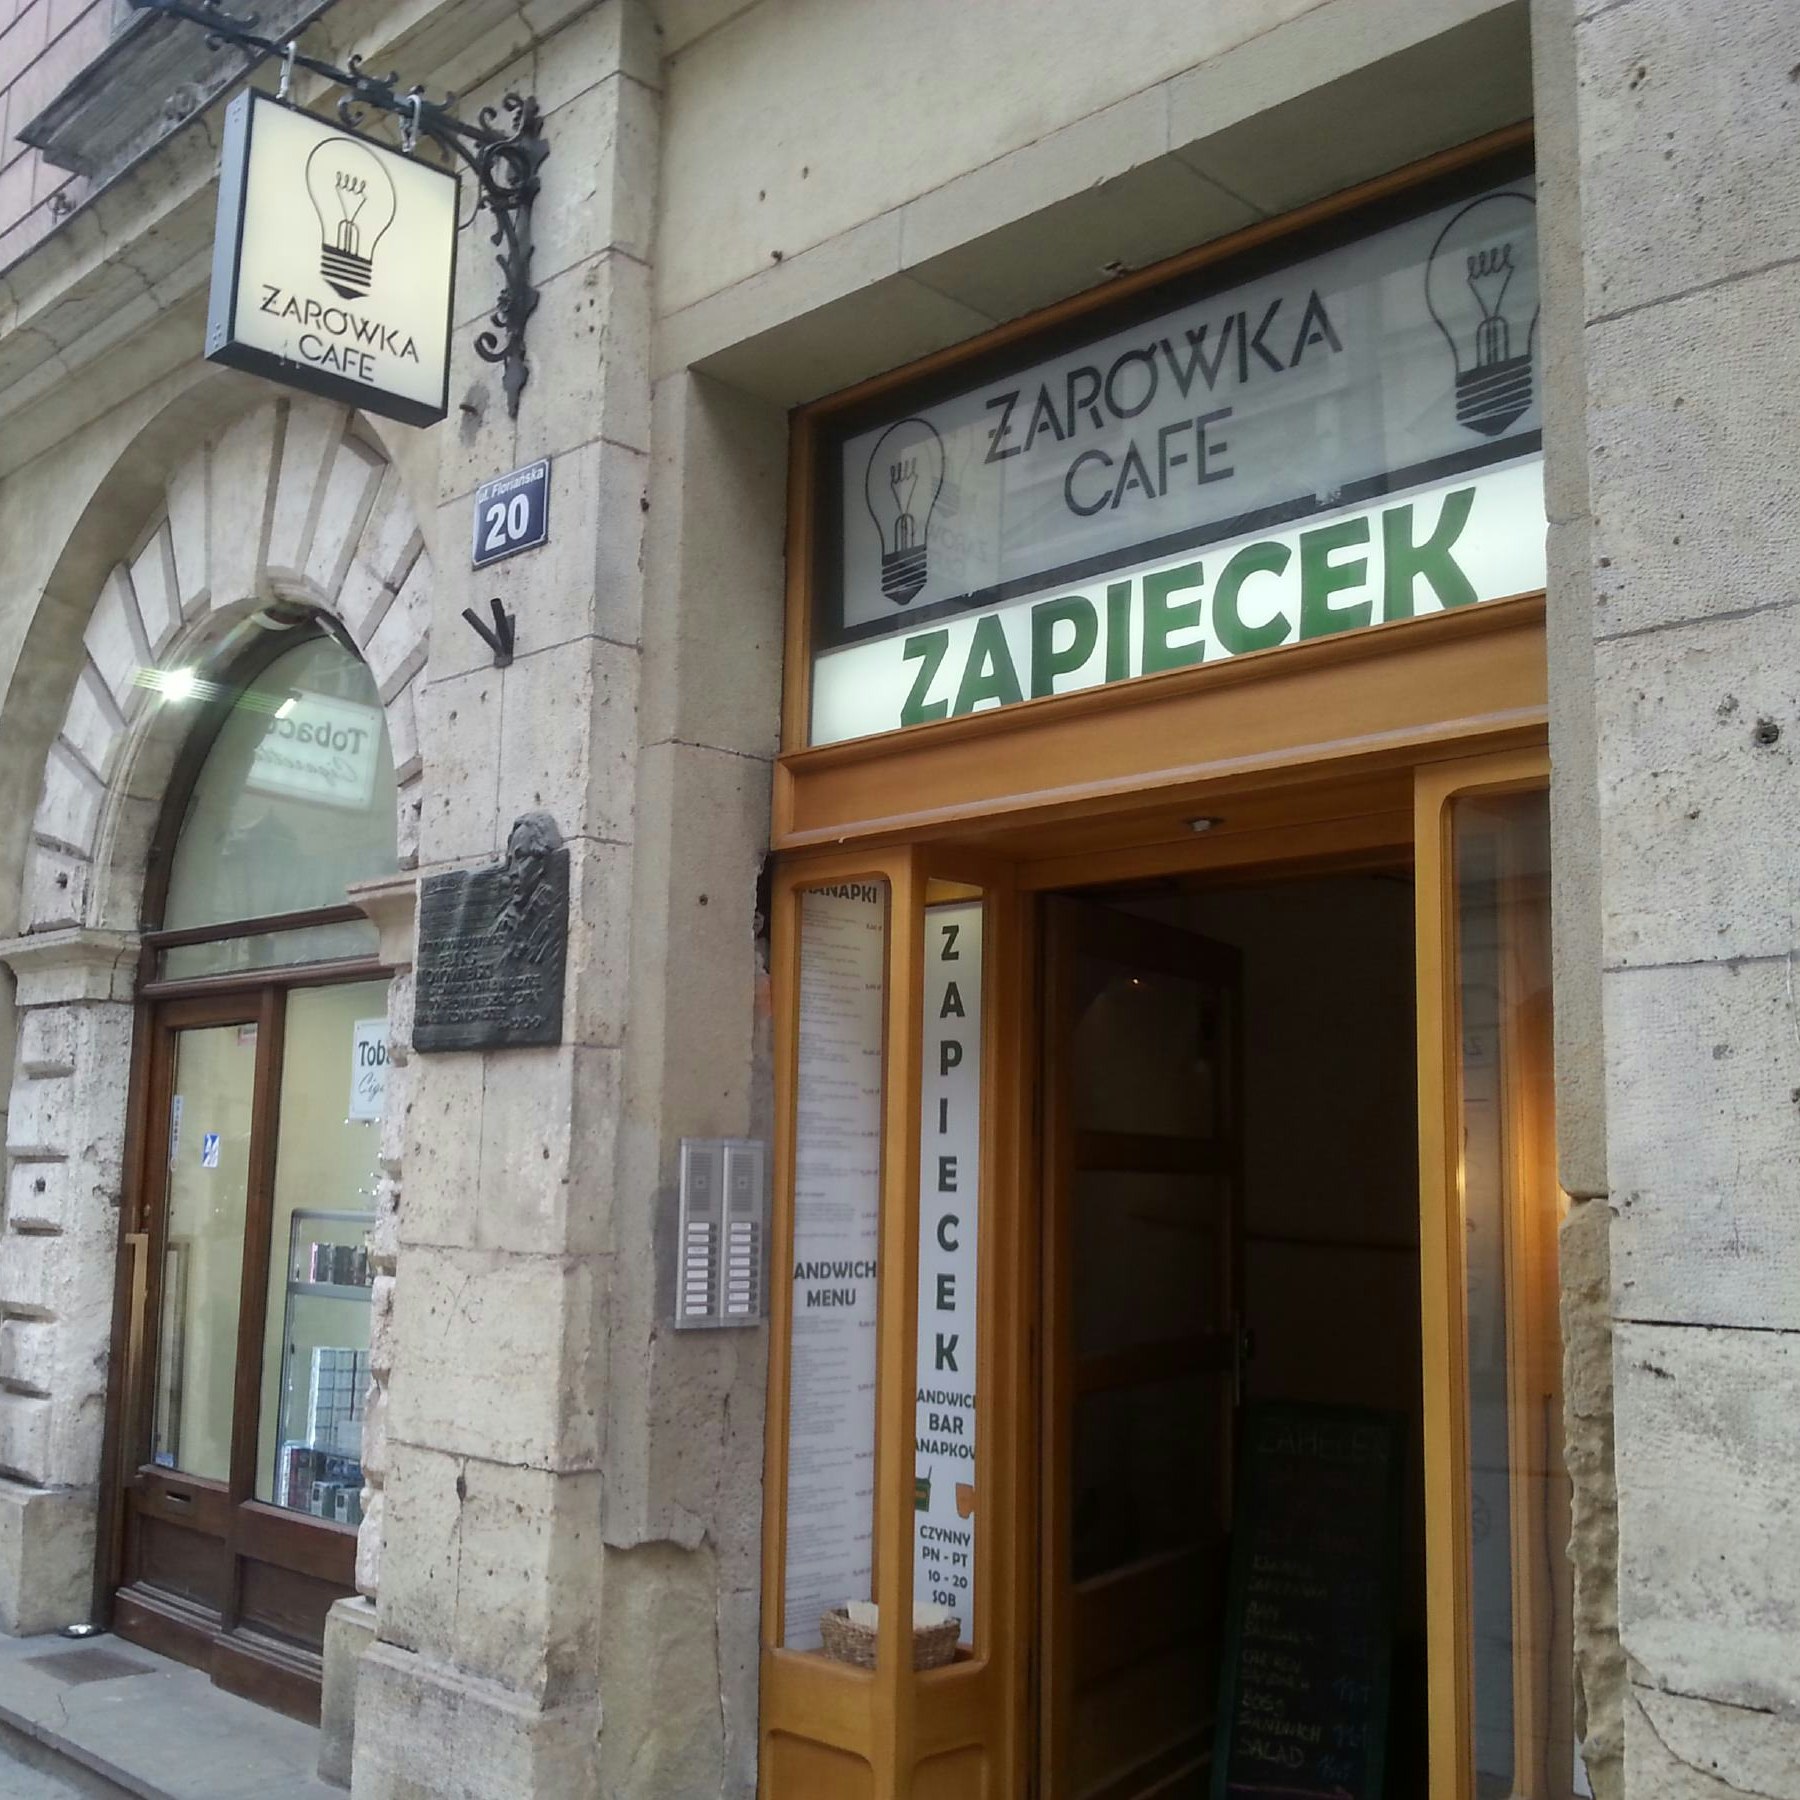 Cafe alleyway is subtley signposted along Florianska